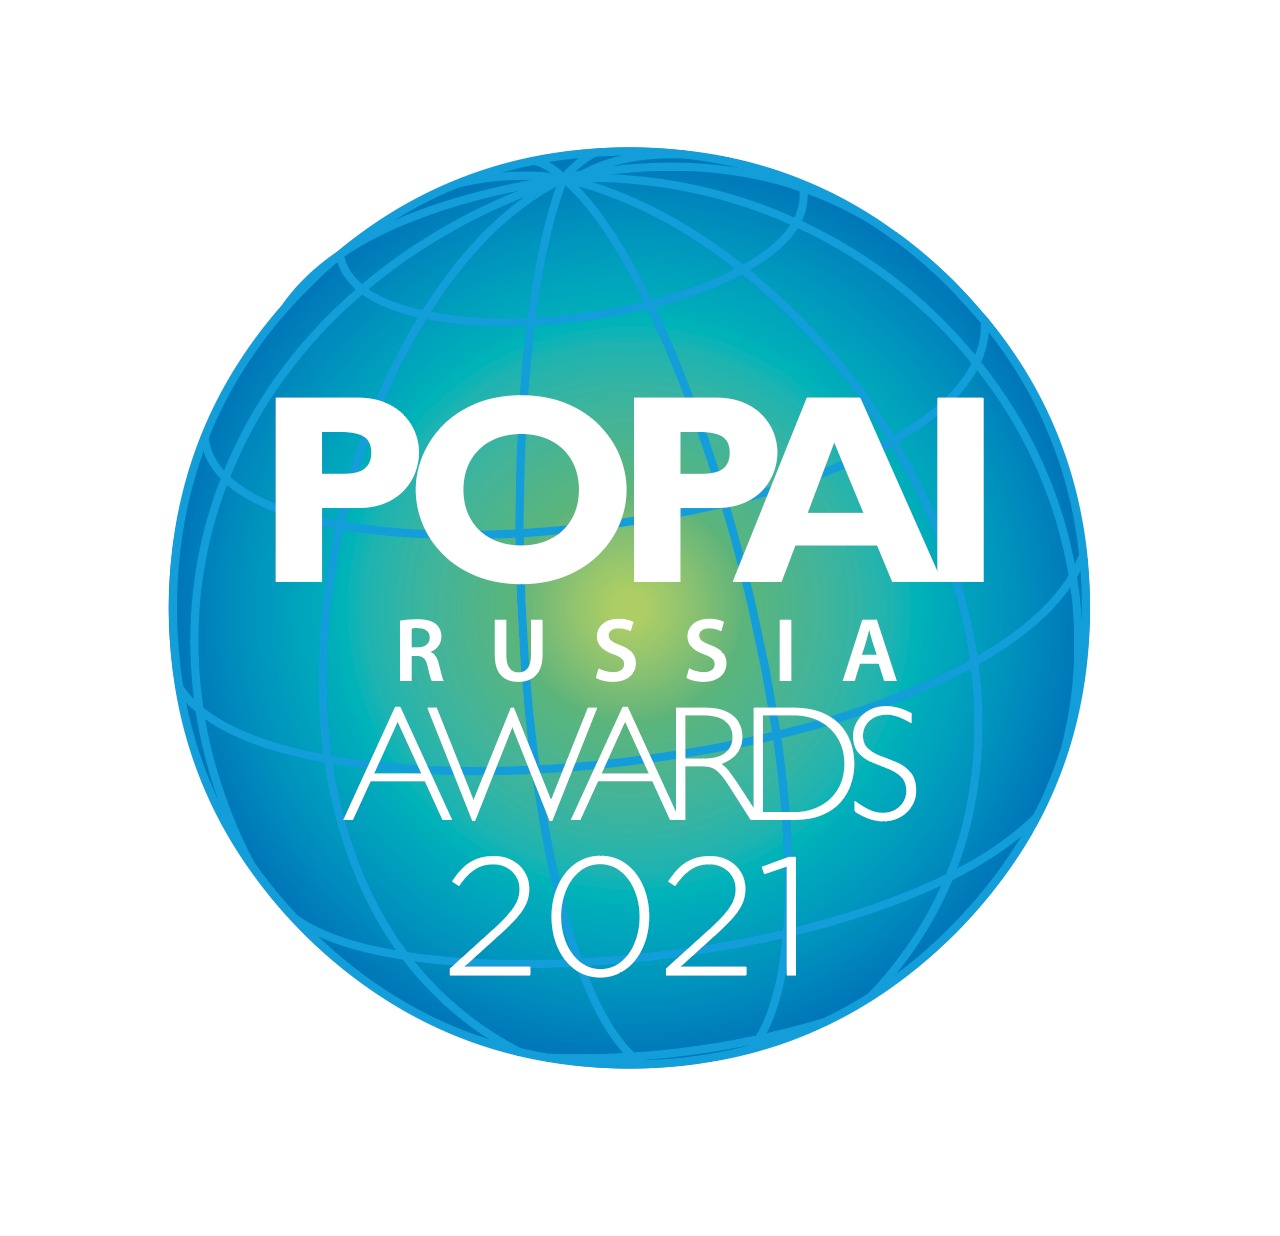   POPAI RUSSIA AWARDS 2021